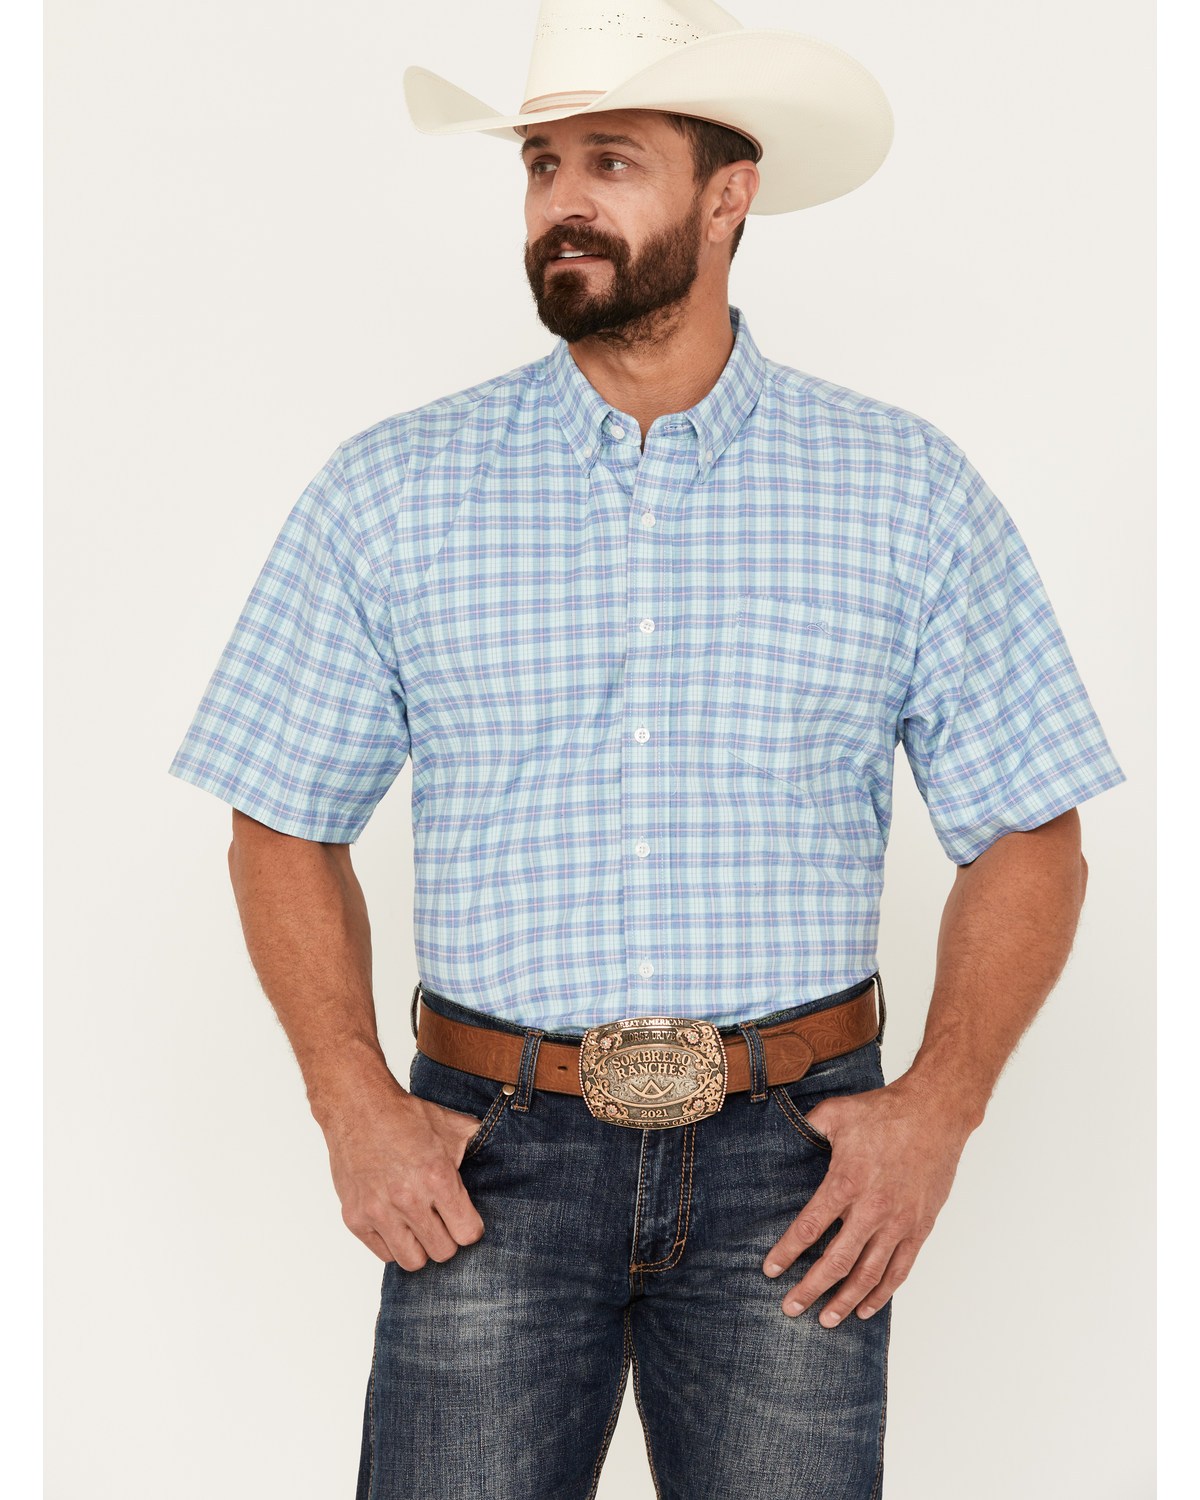 Resistol Men's Delray Plaid Print Long Sleeve Button Down Western Shirt